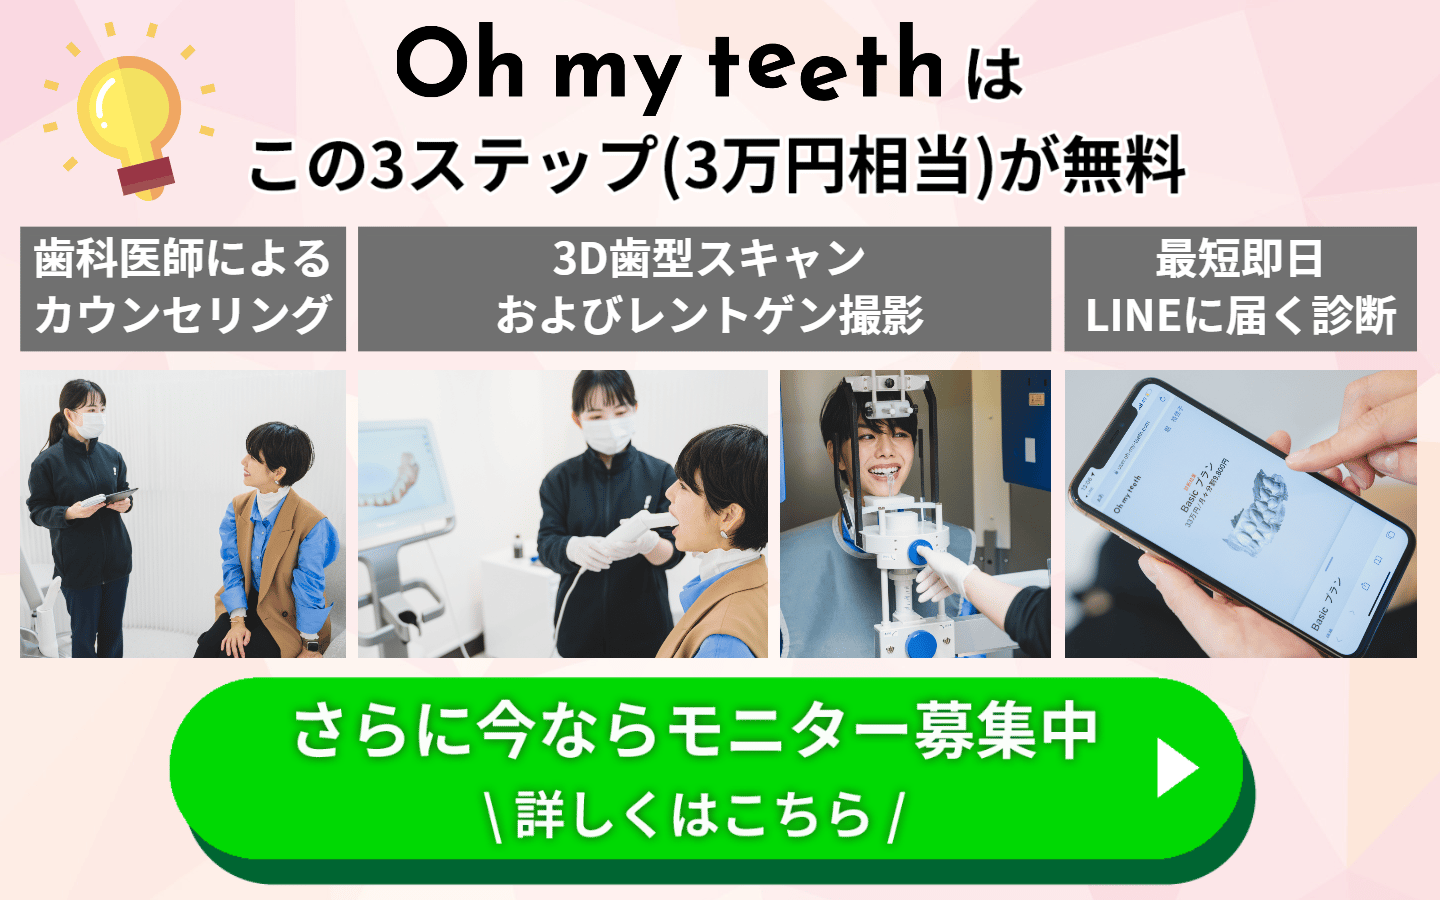 Oh my teethはこの3ステップ(3万円相当)が無料